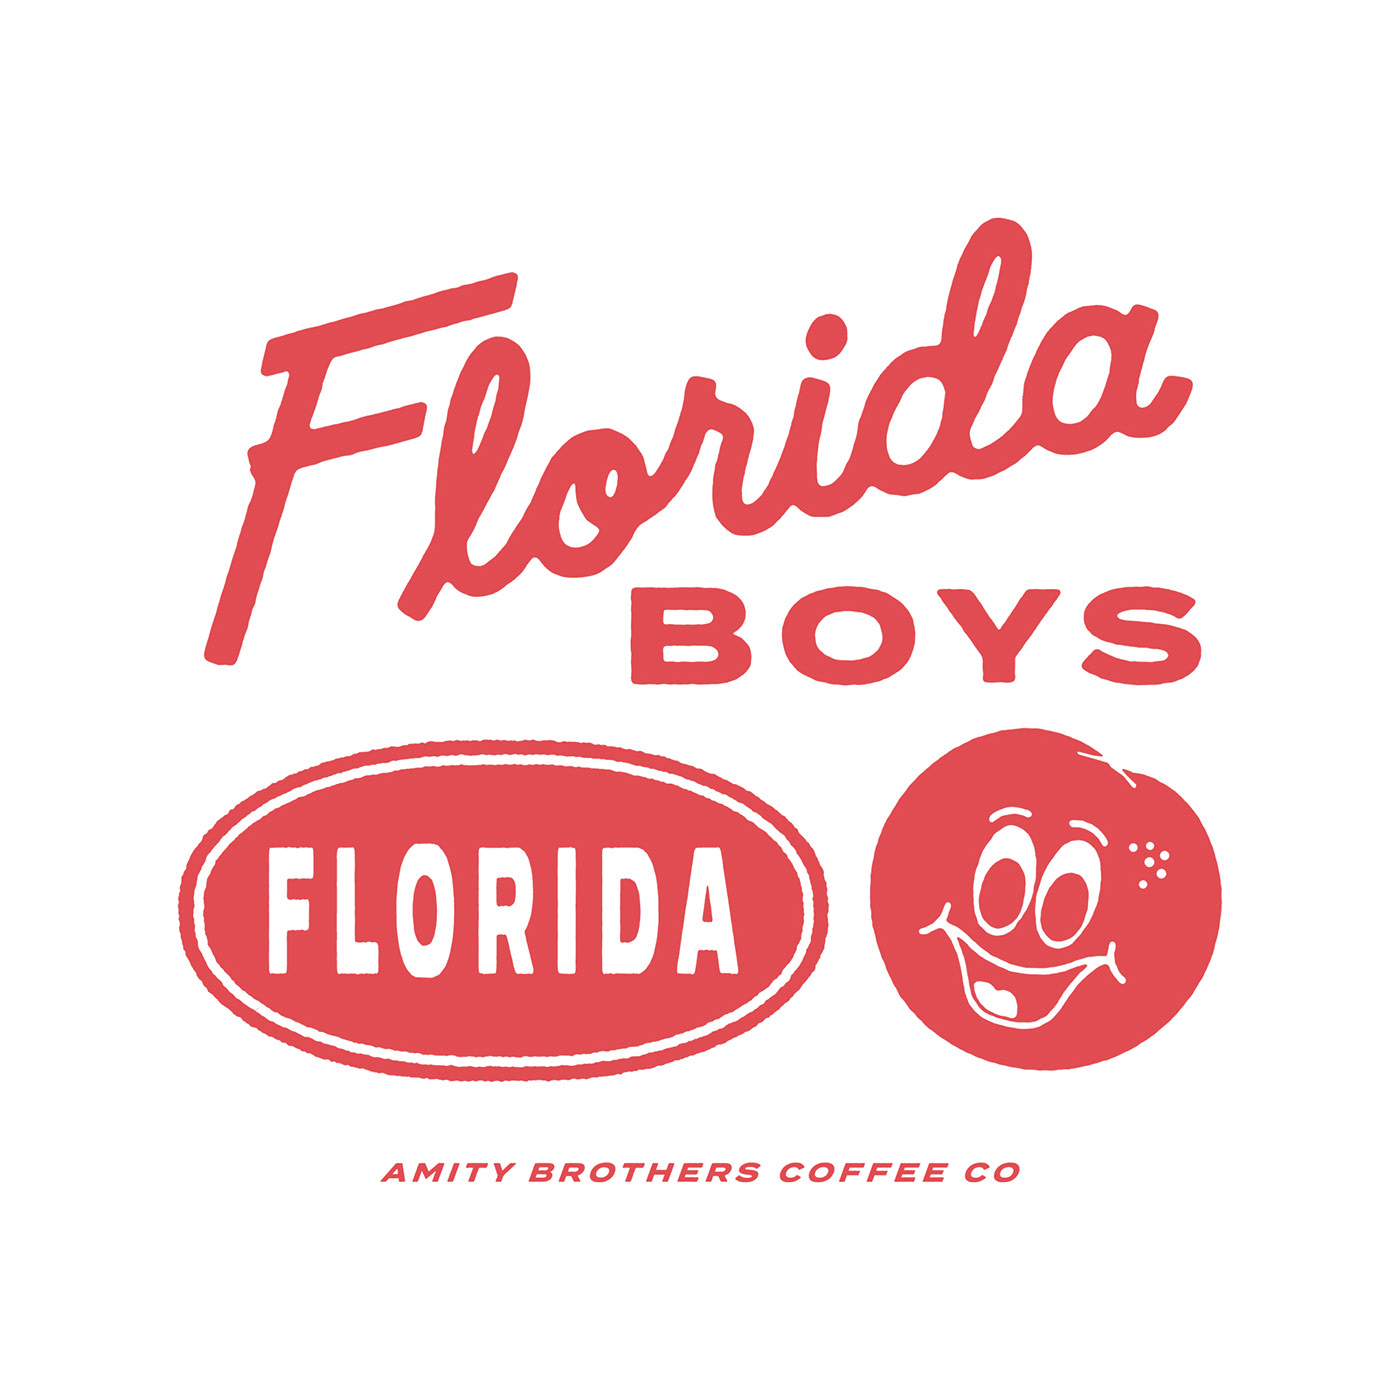 Coffee coffee branding florida florida boys HAND LETTERING lettering merchandise t-shirt